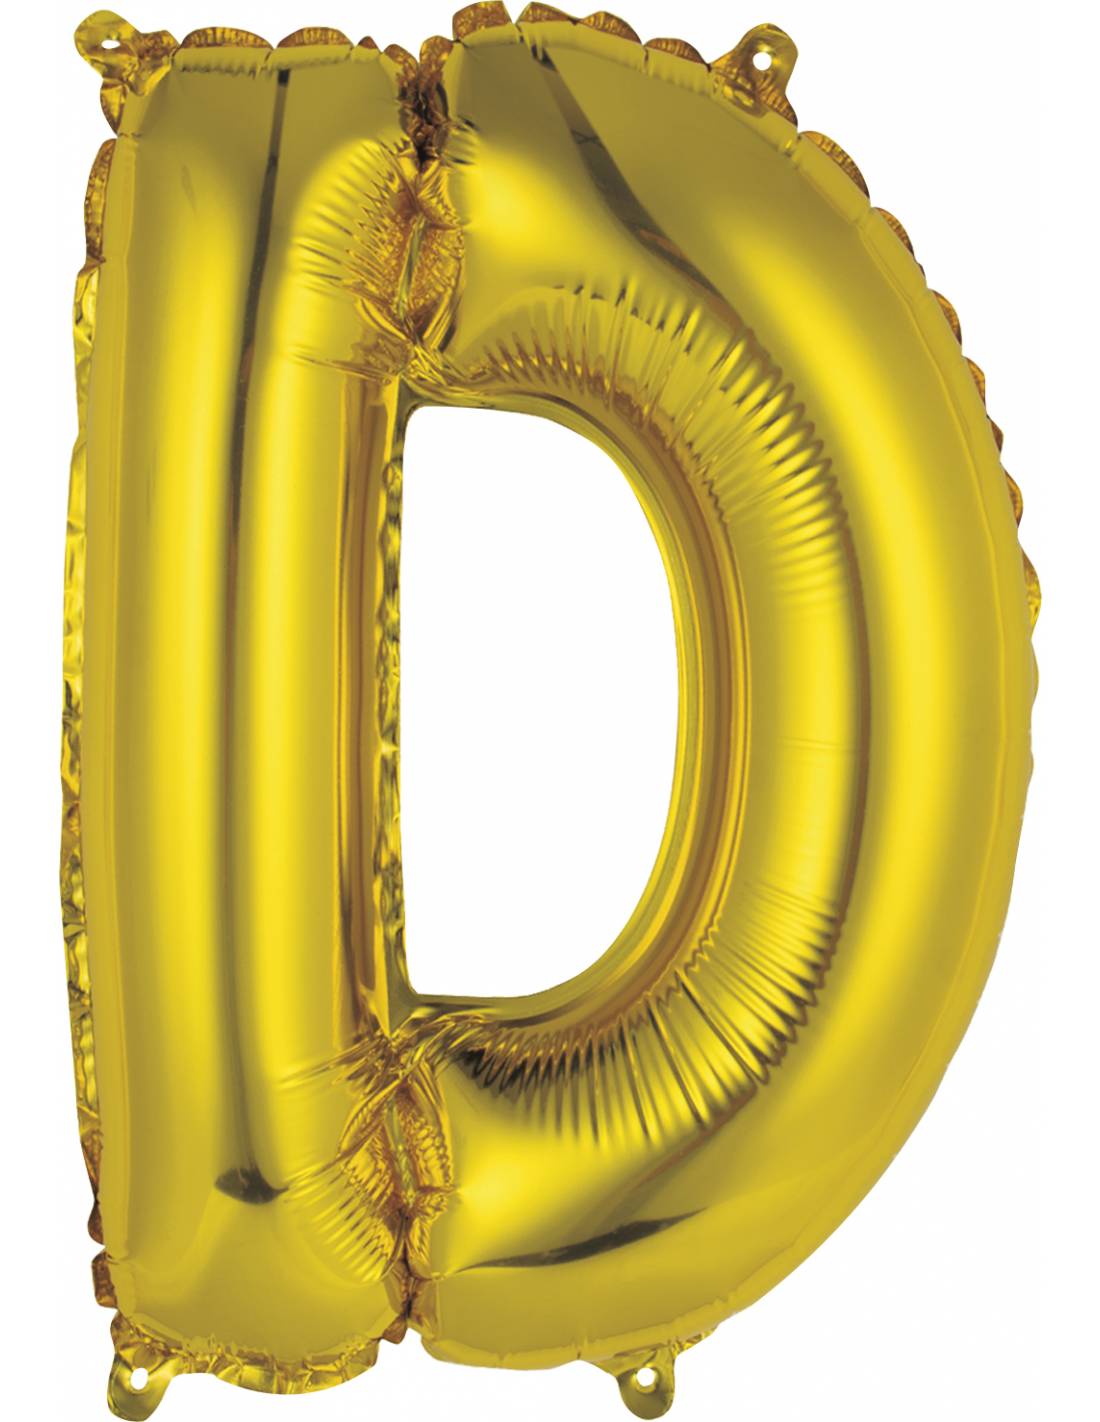 “D” Gold letter air filled balloon